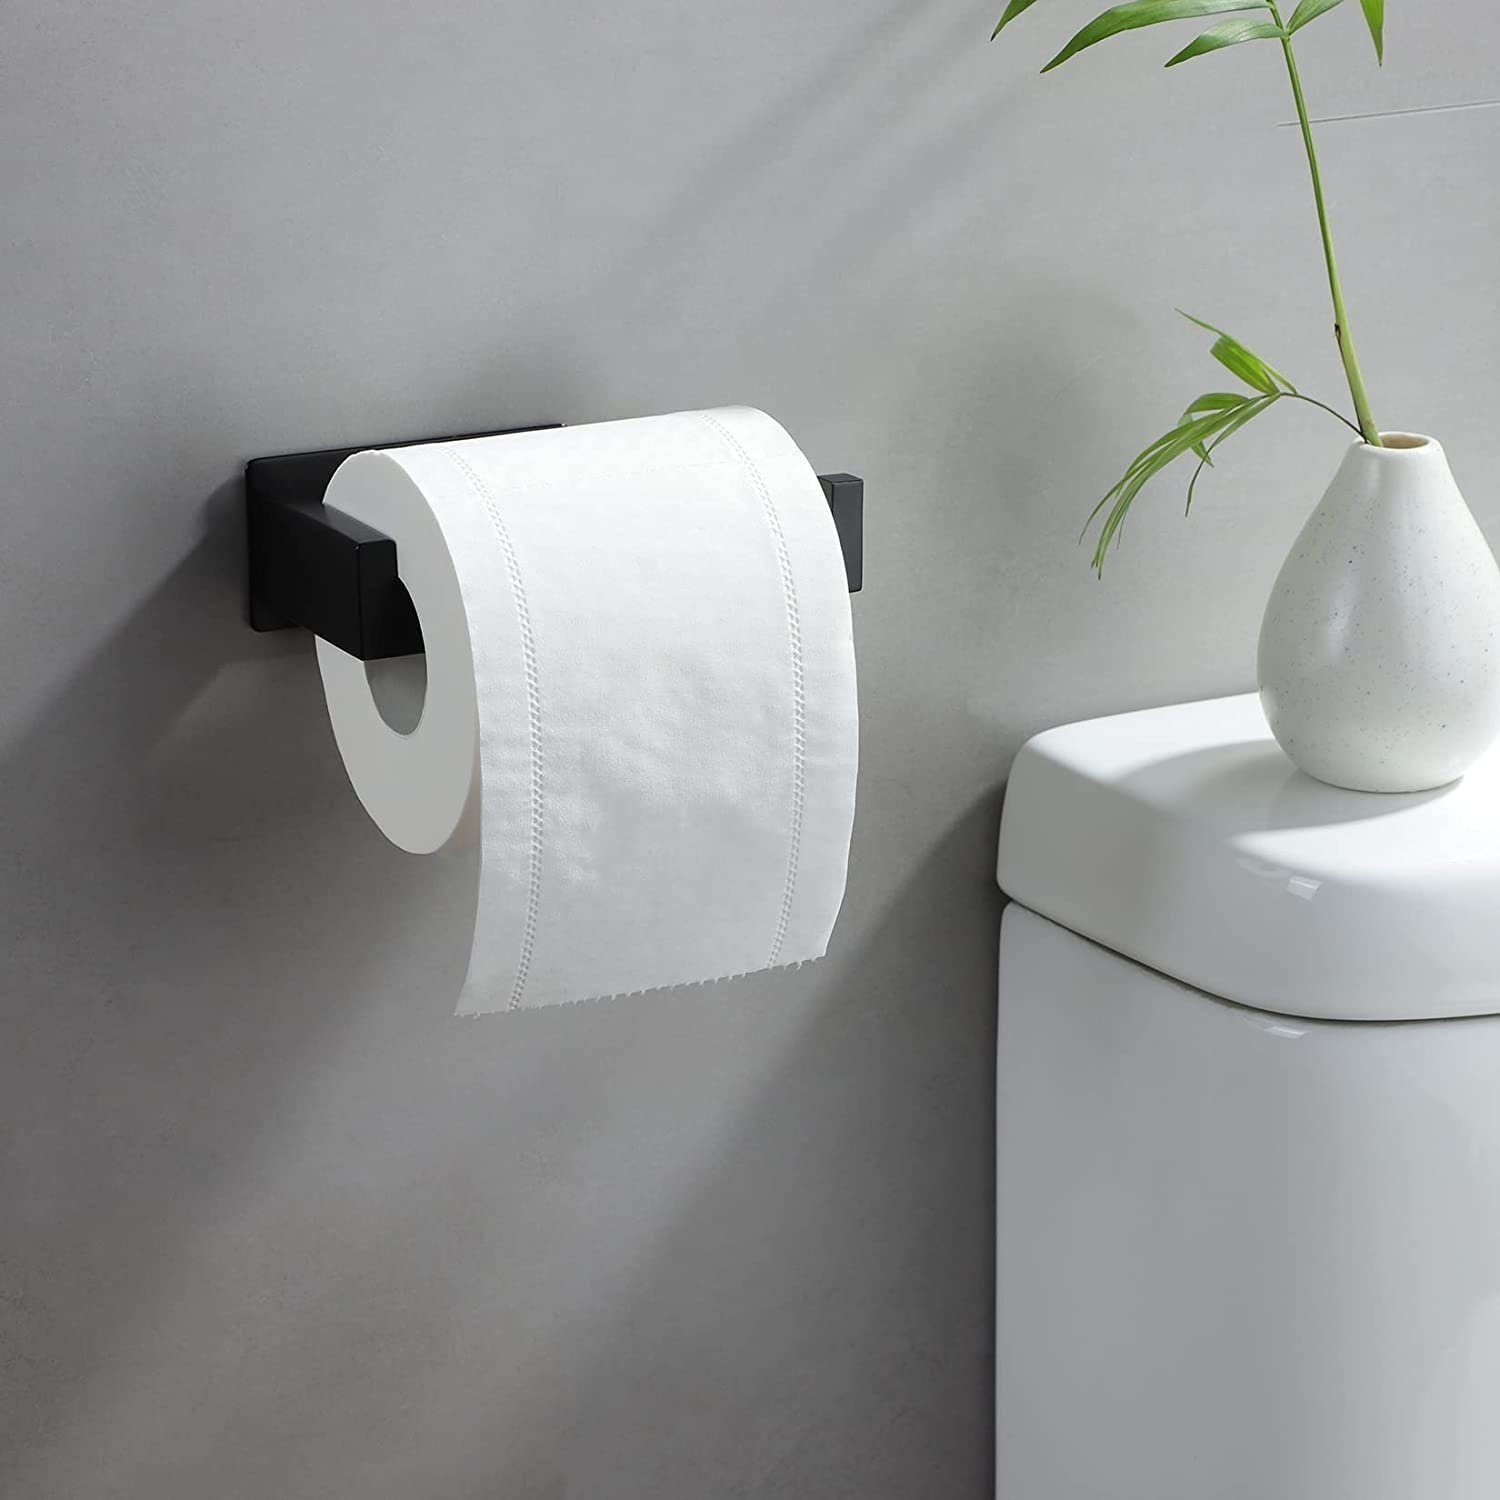 schwarz, Bohren Haiaveng Toilettenpapierhalter, Kein Bohren kein Toilettenpapierhalter erforderlich,